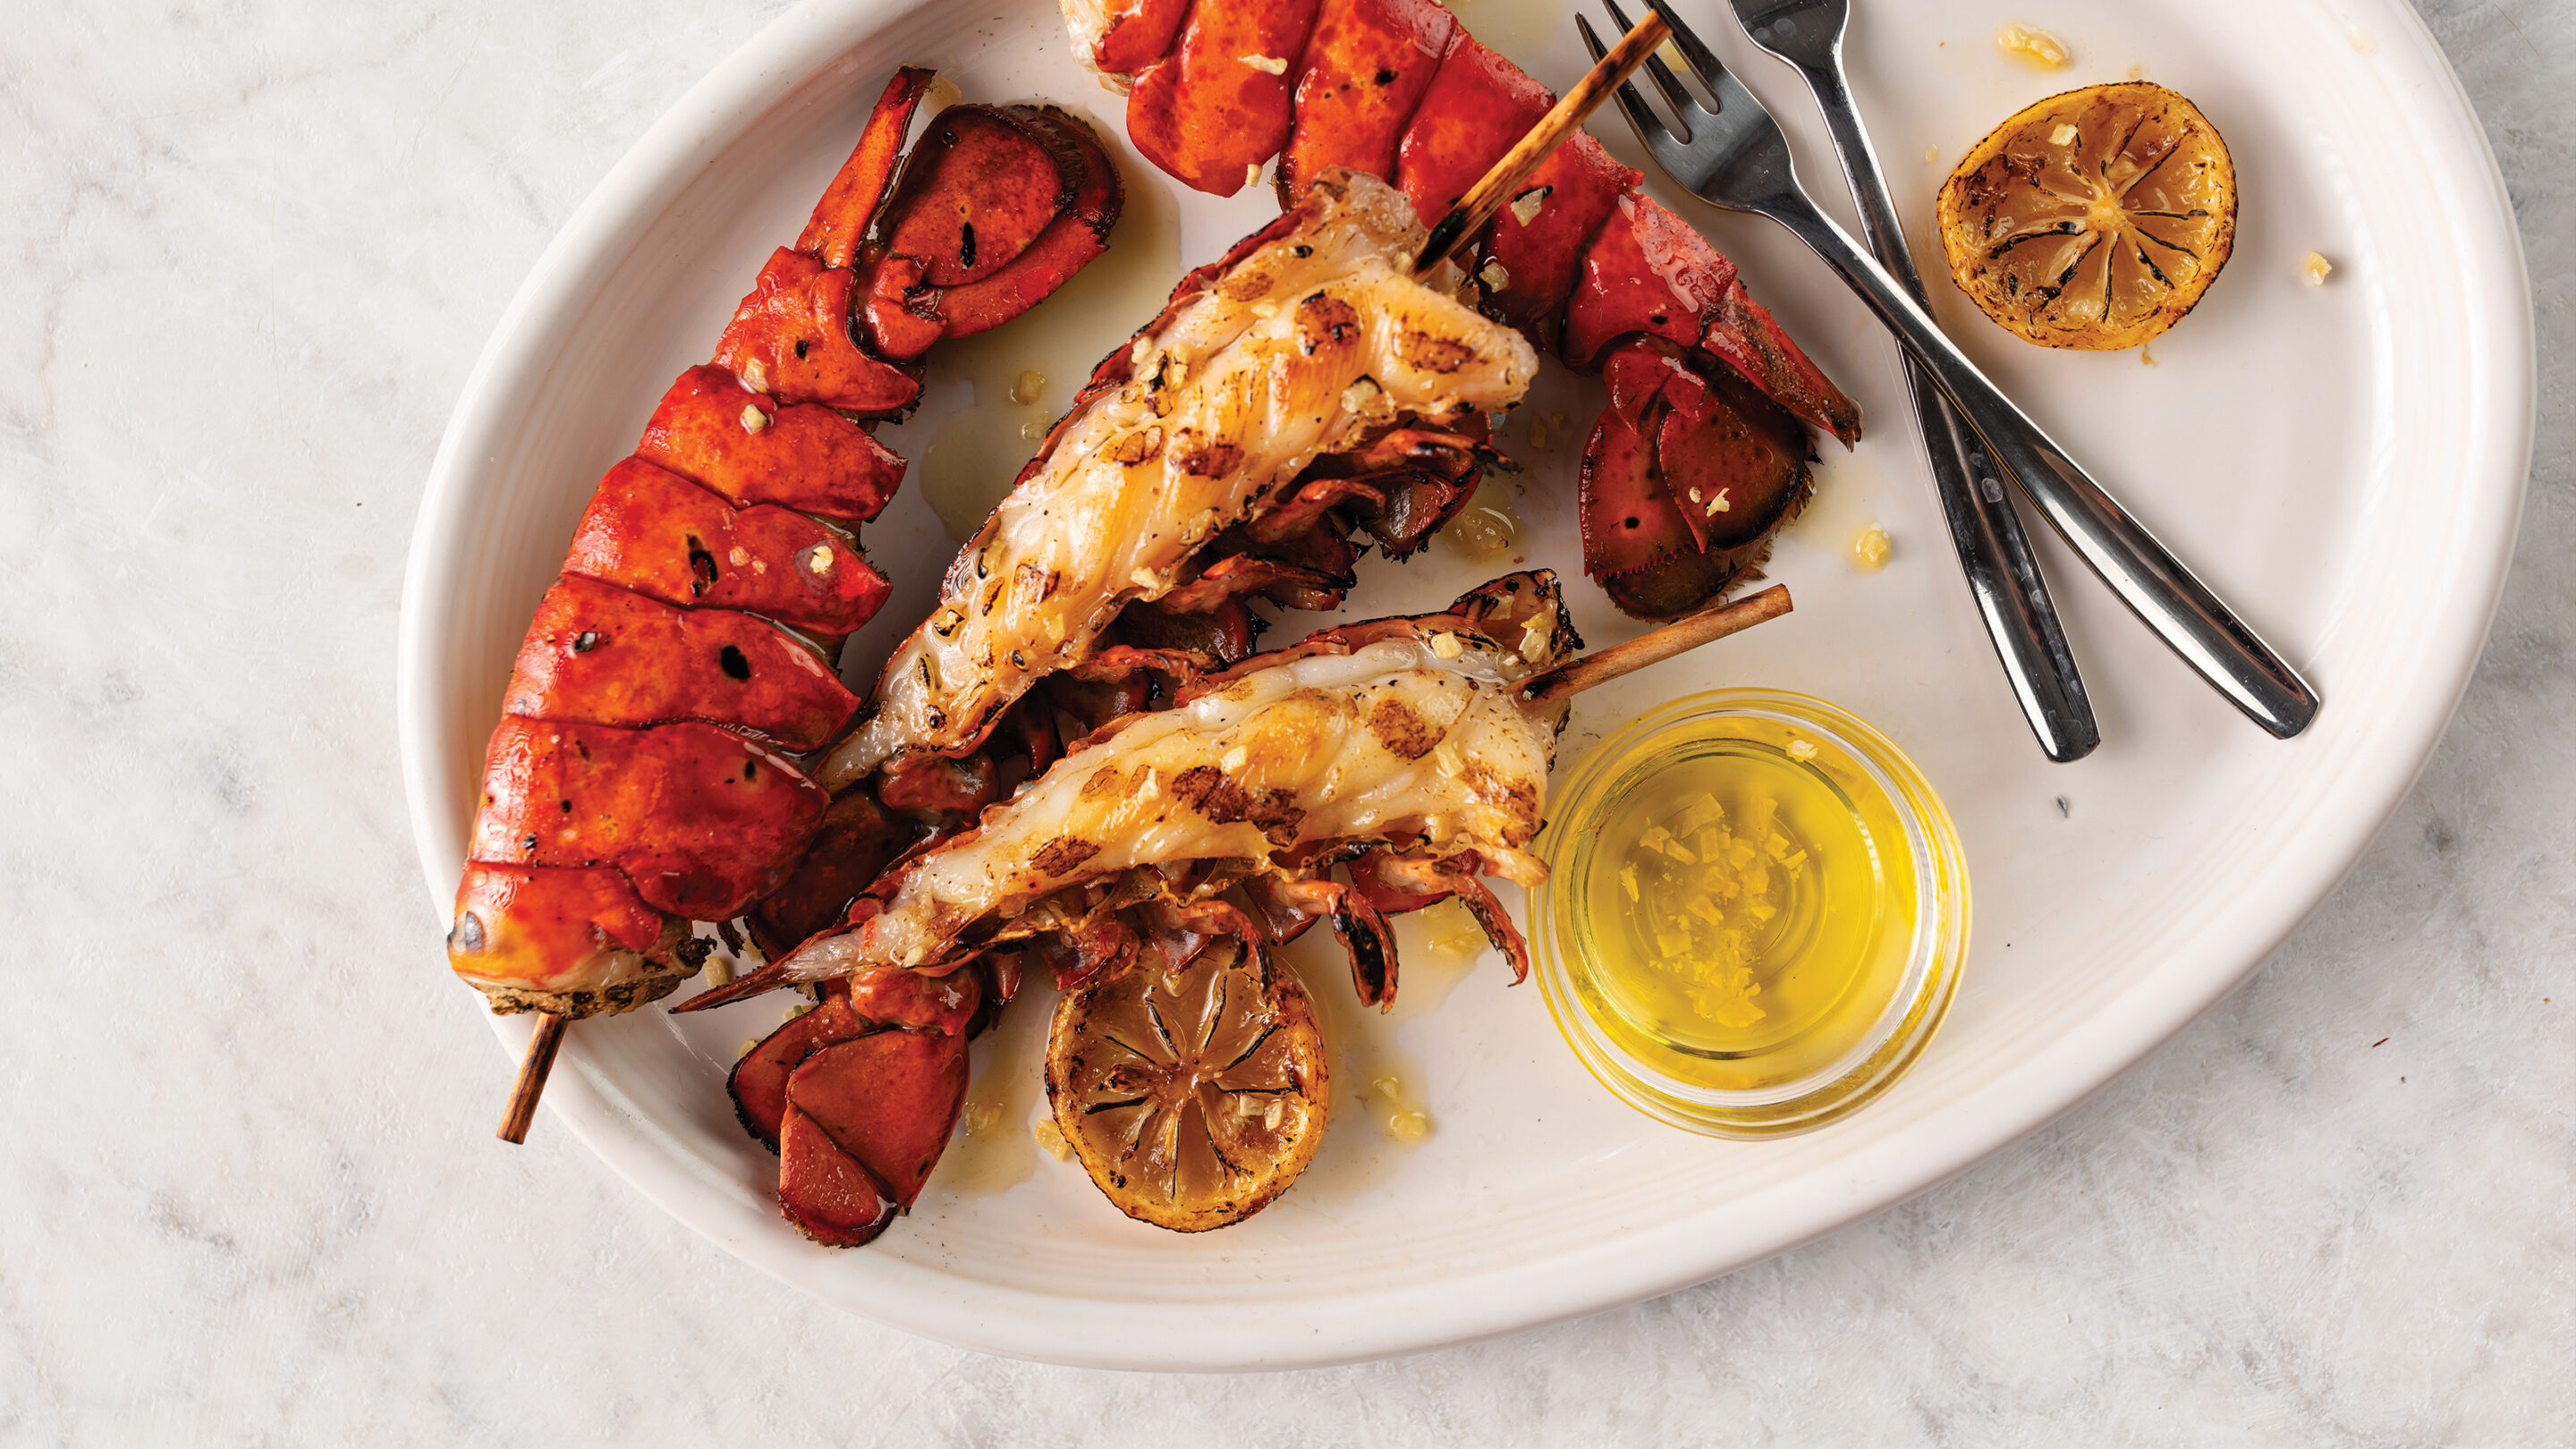 https://blog-content.omahasteaks.com/wp-content/uploads/2022/06/blogwp_how-to-boil-lobster-scaled-1.jpg